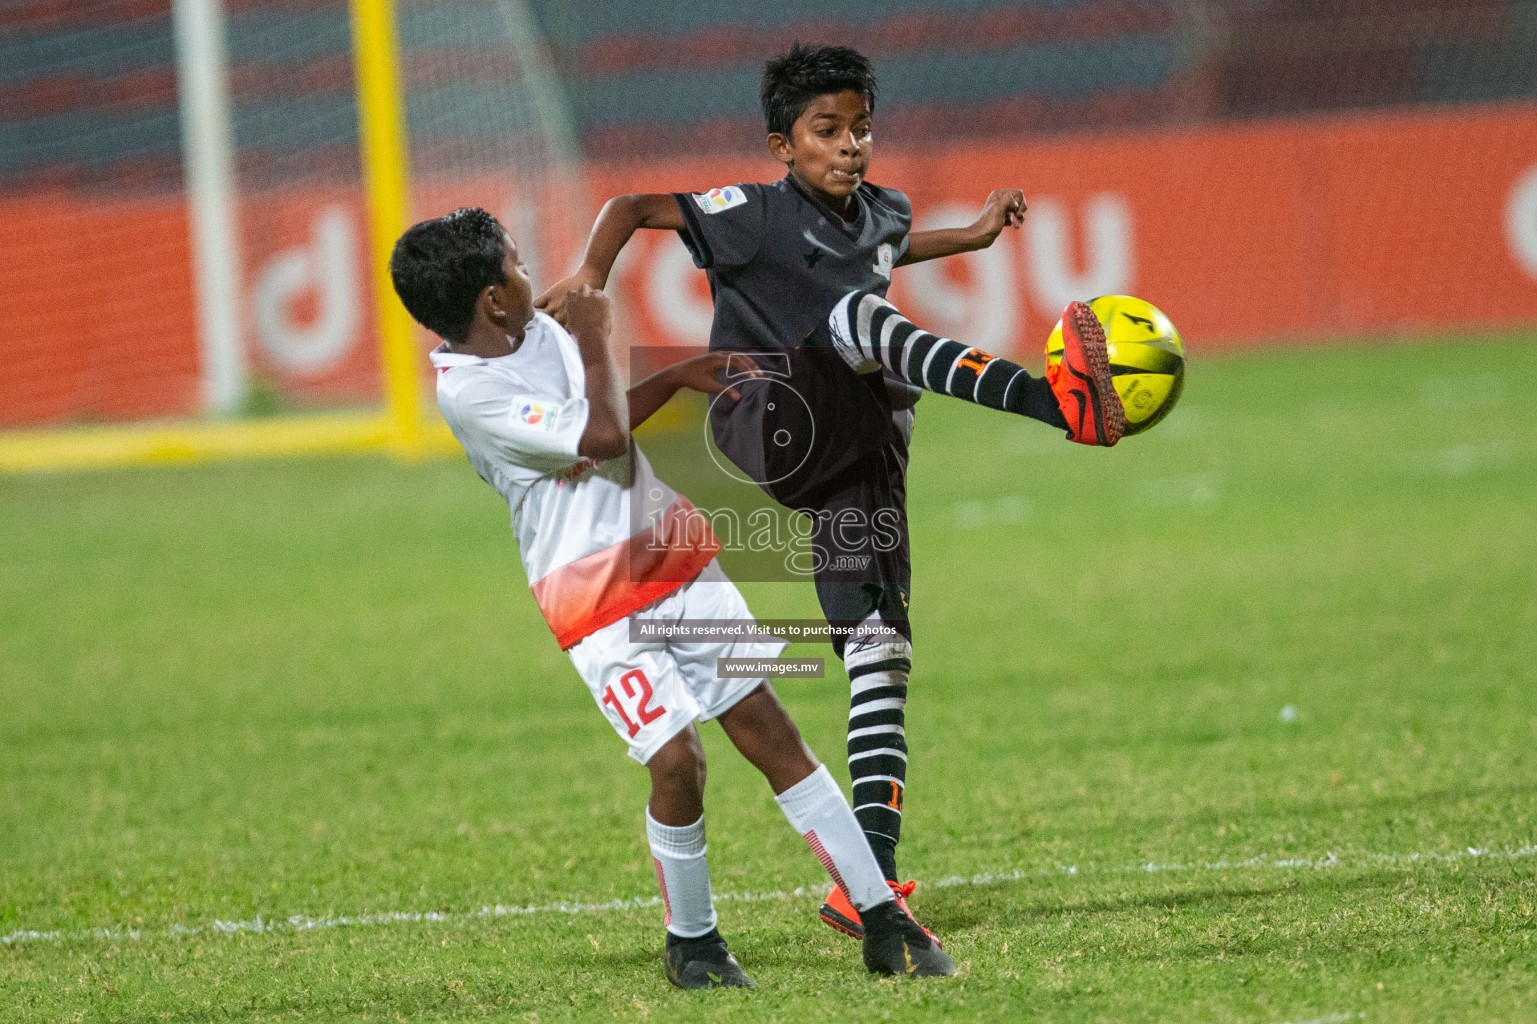 Iskandhar School vs Ghaazee School in MAMEN Inter School Football Tournament 2019 (U13) in Male, Maldives on 19th April 2019 Photos: Suadh Abdul Sattar /images.mv